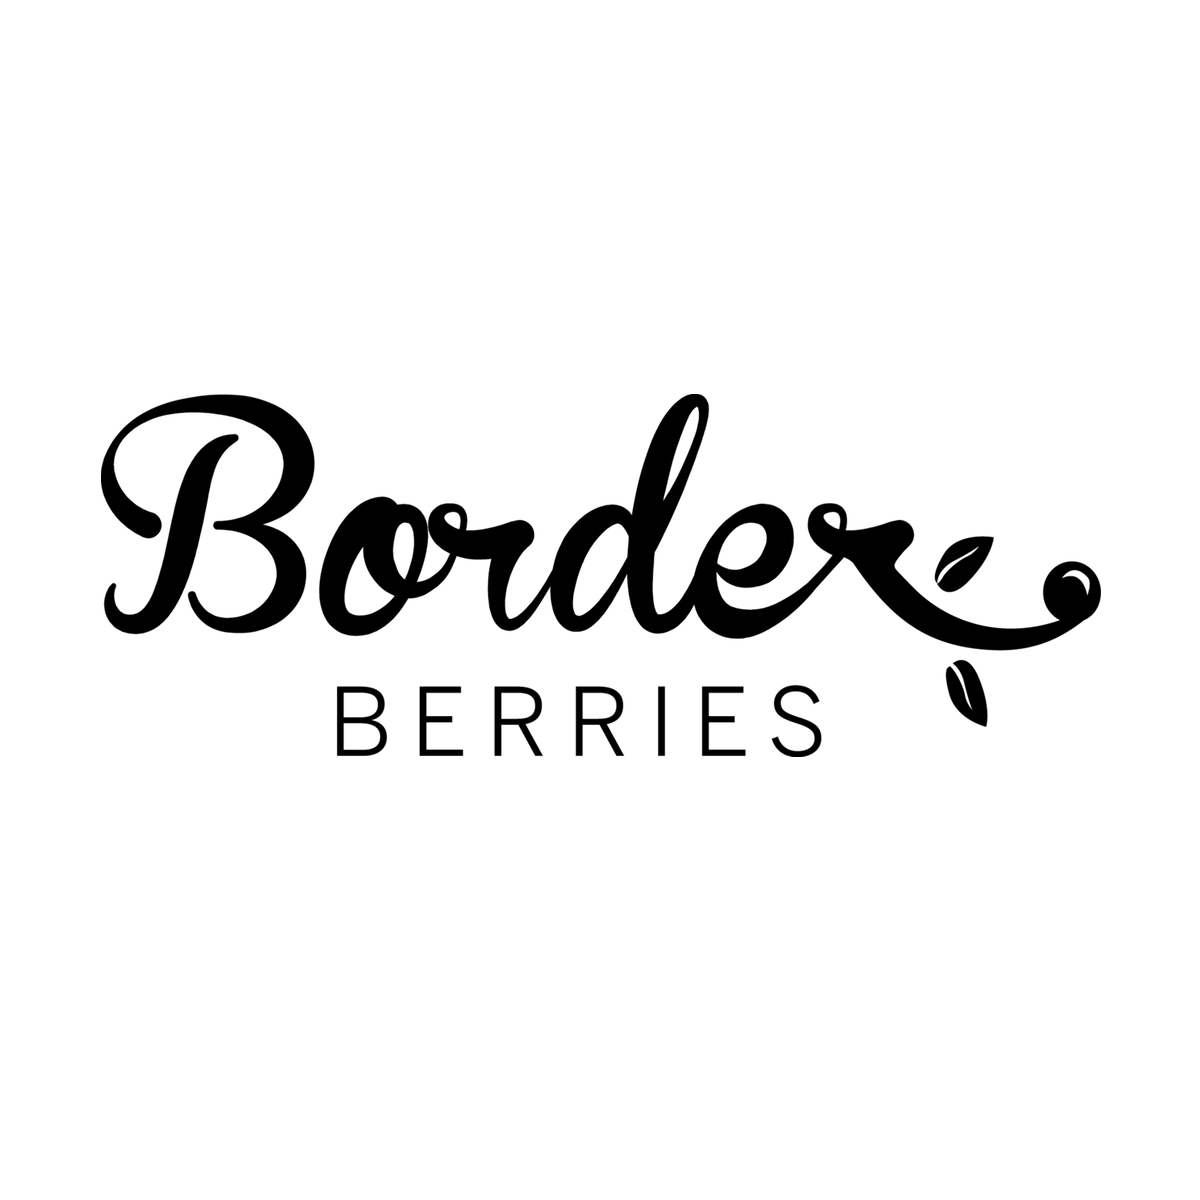 Borders Berries brand logo